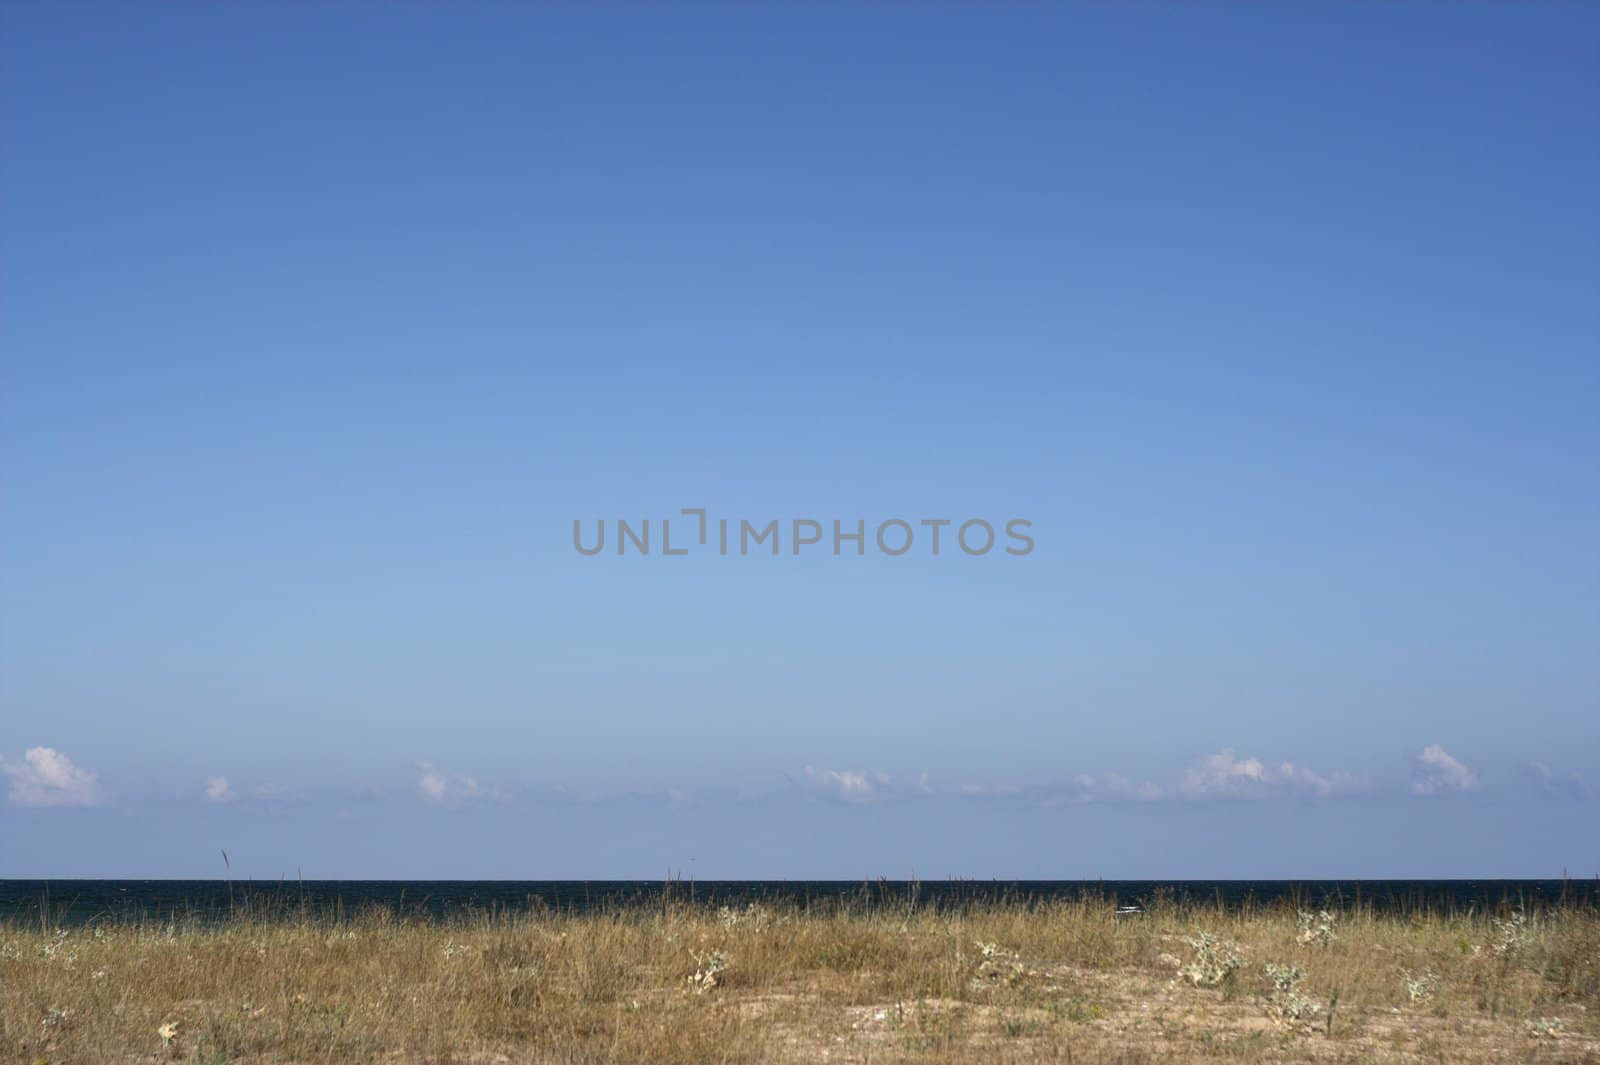 Blue sky minimalistic view of a beach